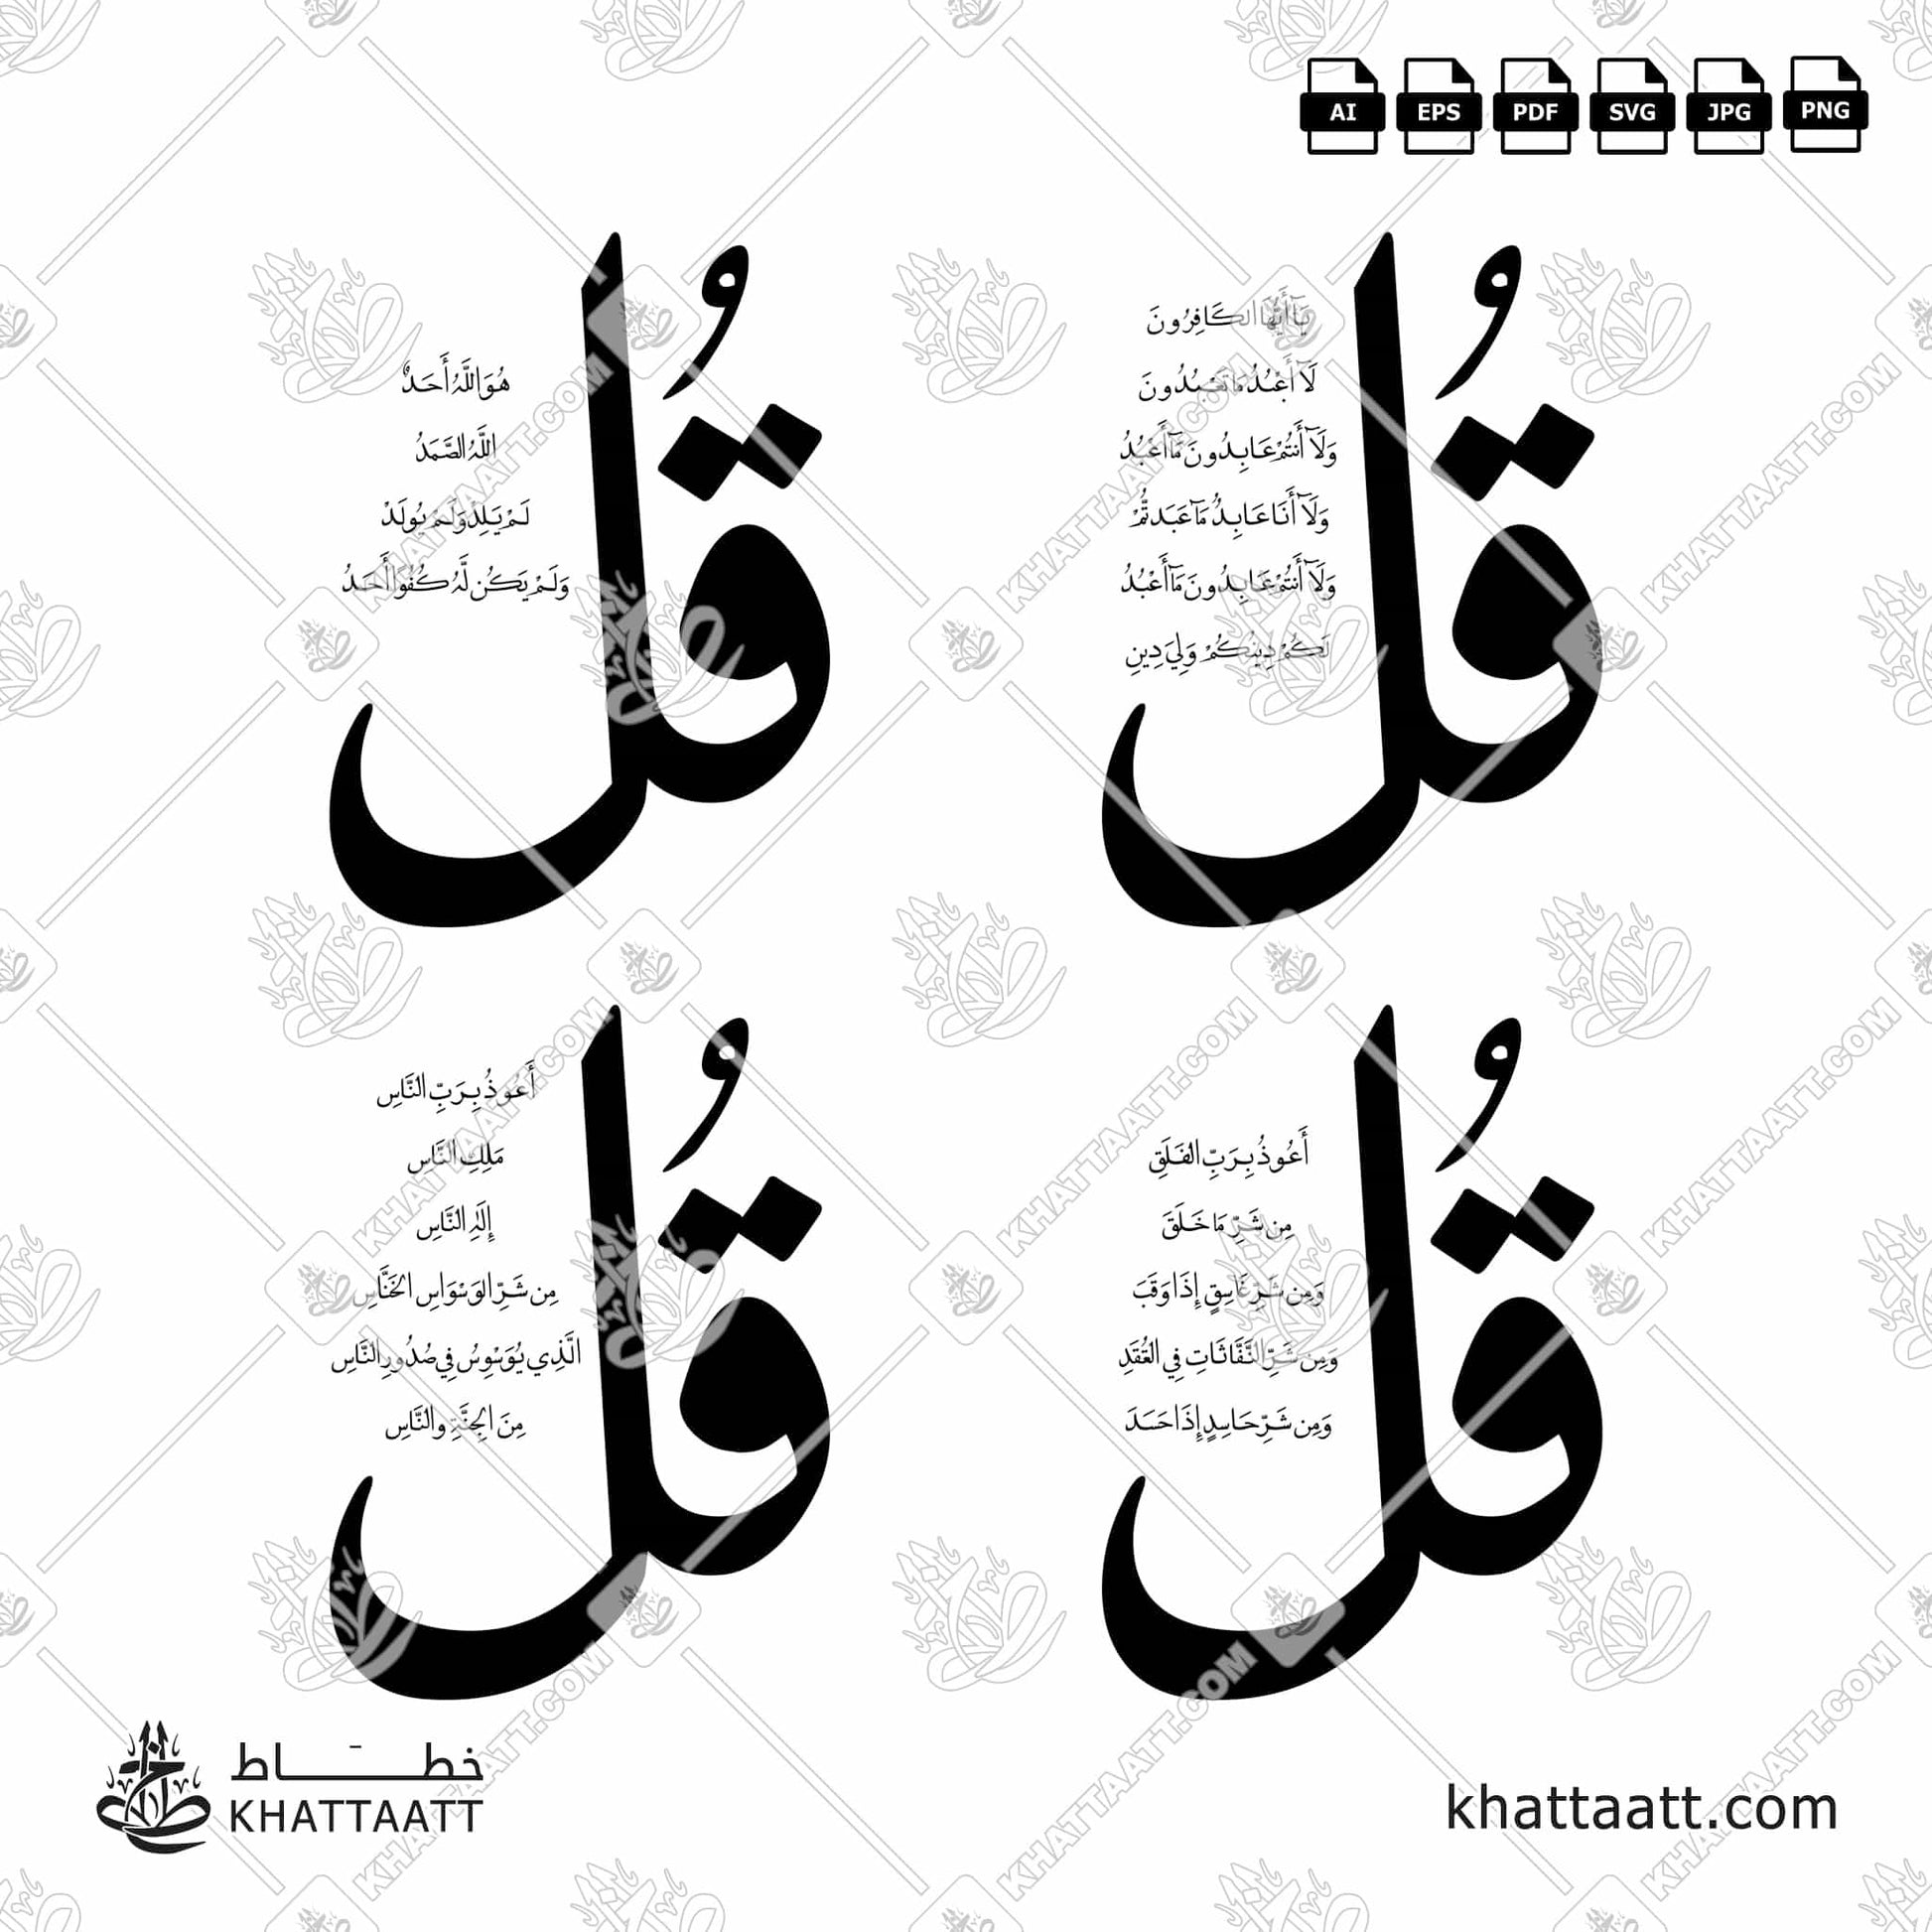 Download Arabic calligraphy تحميل مخطوطة خط عربي of The 4 Quls - القلاقل الأربعة (SFN012) Naskh - خط النسخ in vector فيكتور and png